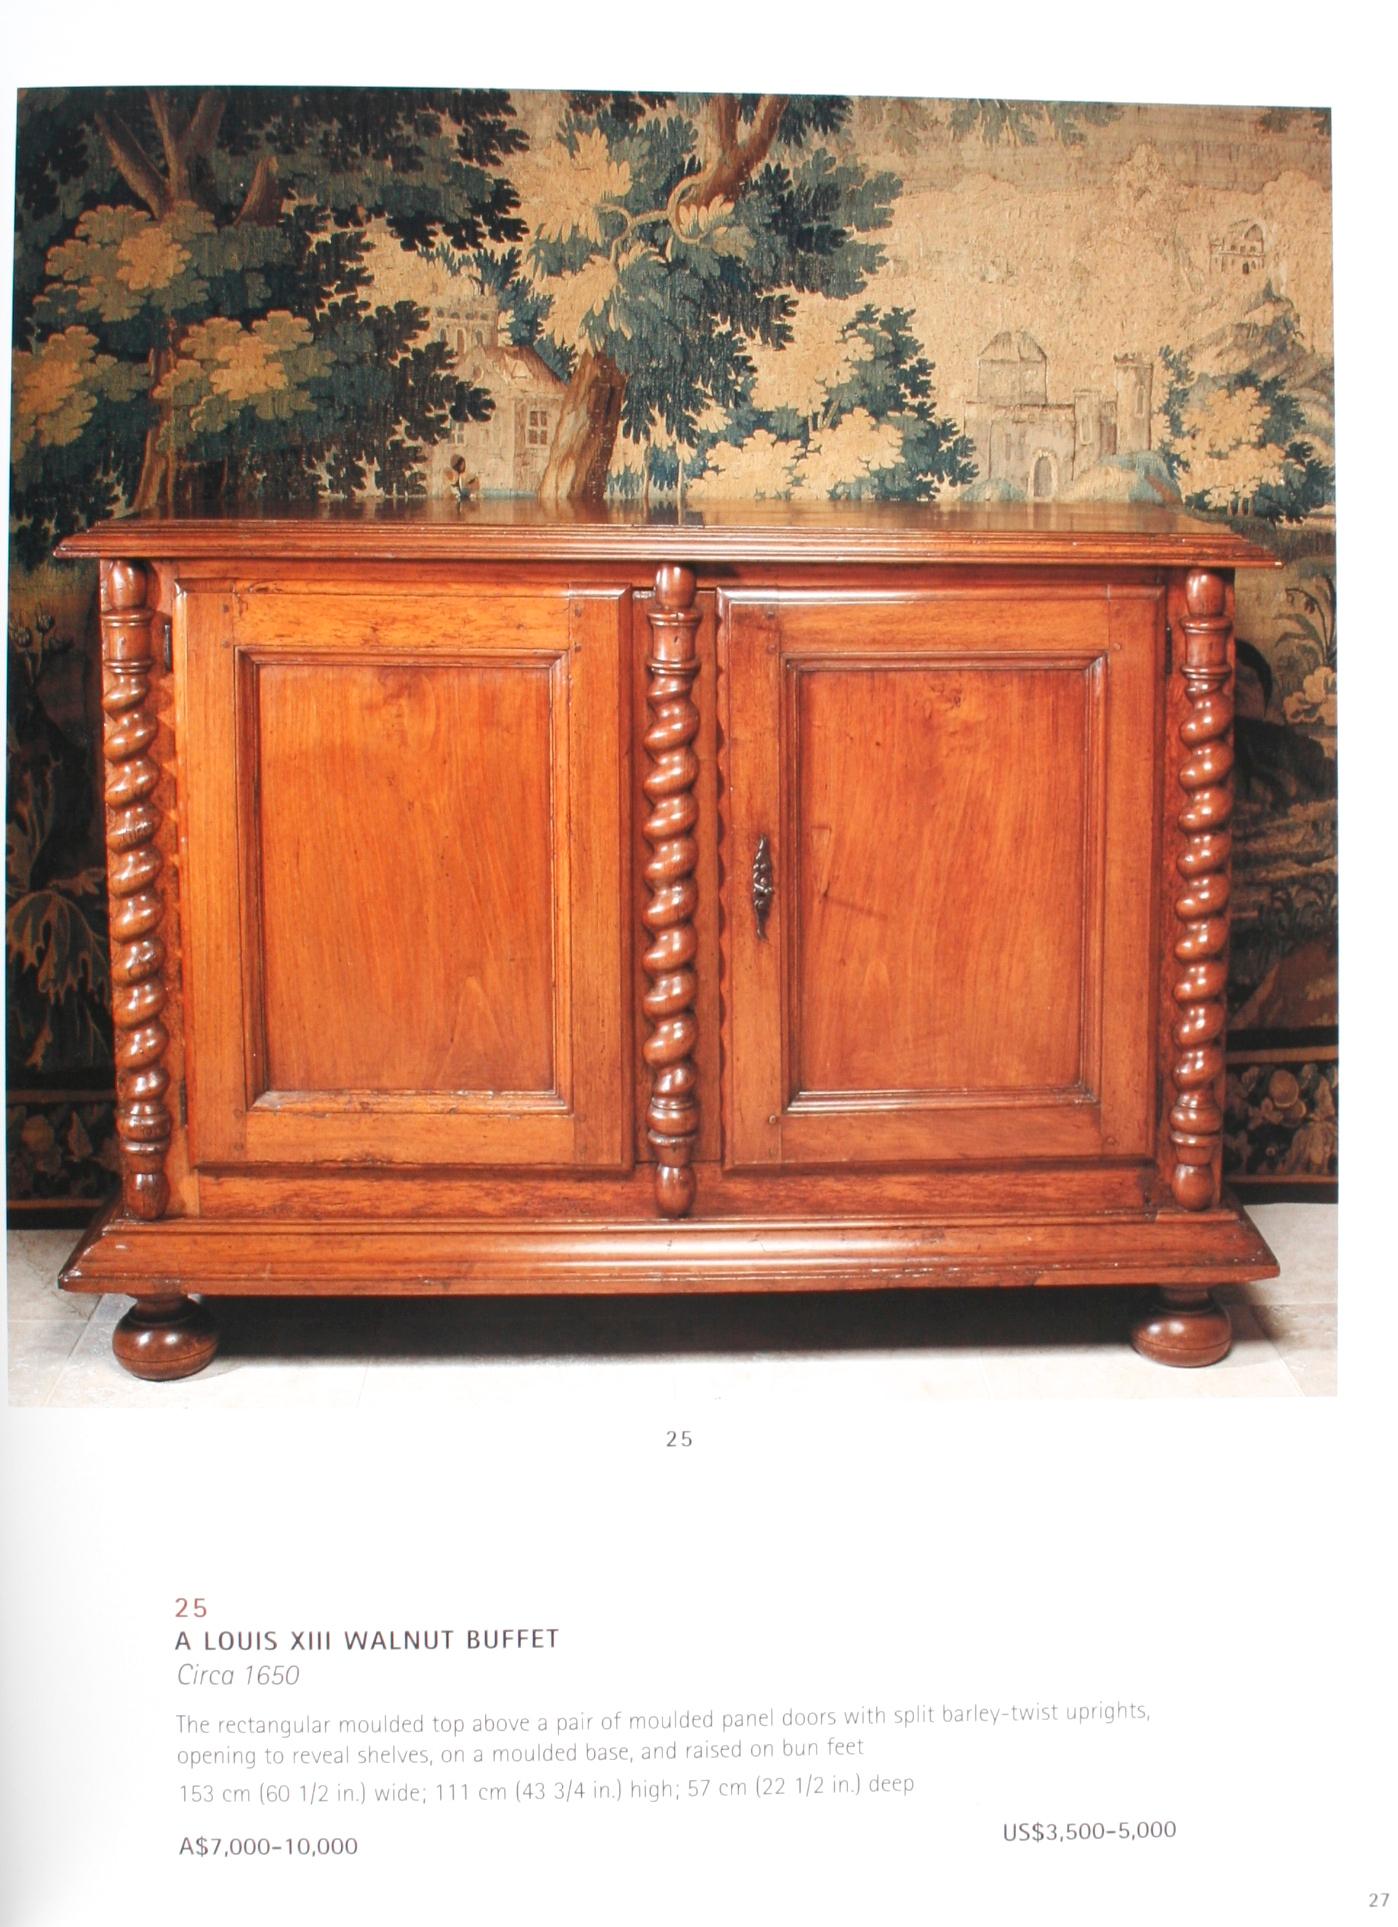 Christies avril 2002 French Furniture & Decorative Arts, a & C Fink Collections Bon état - En vente à valatie, NY